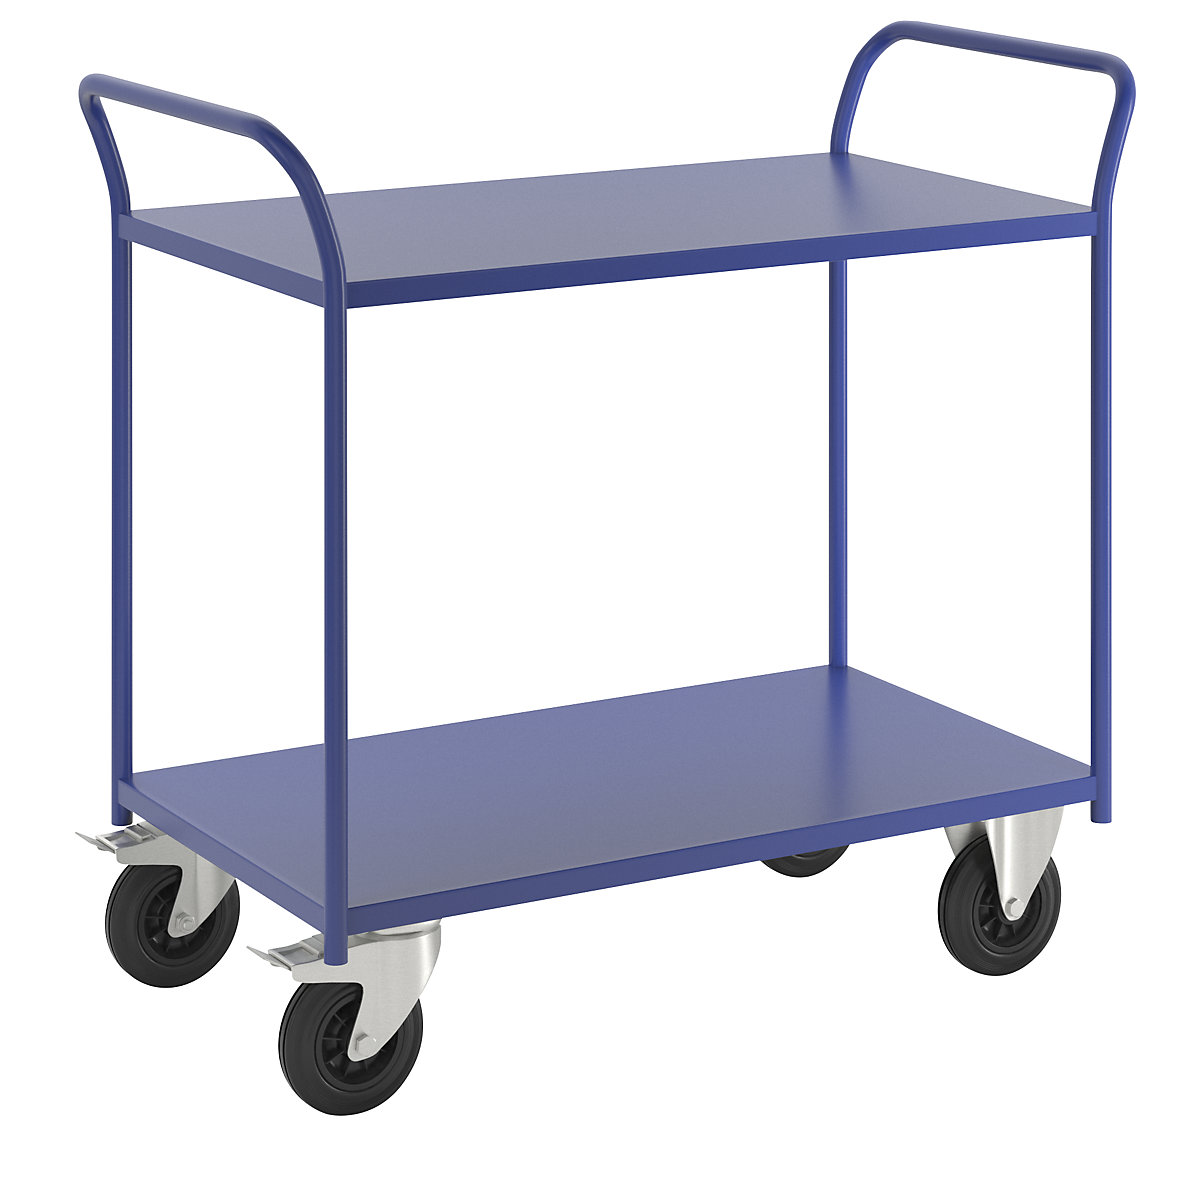 KM41 table trolley – Kongamek, 2 shelves, LxWxH 1070 x 550 x 1000 mm, blue, 2 swivel castors with stops, 2 fixed castors-5